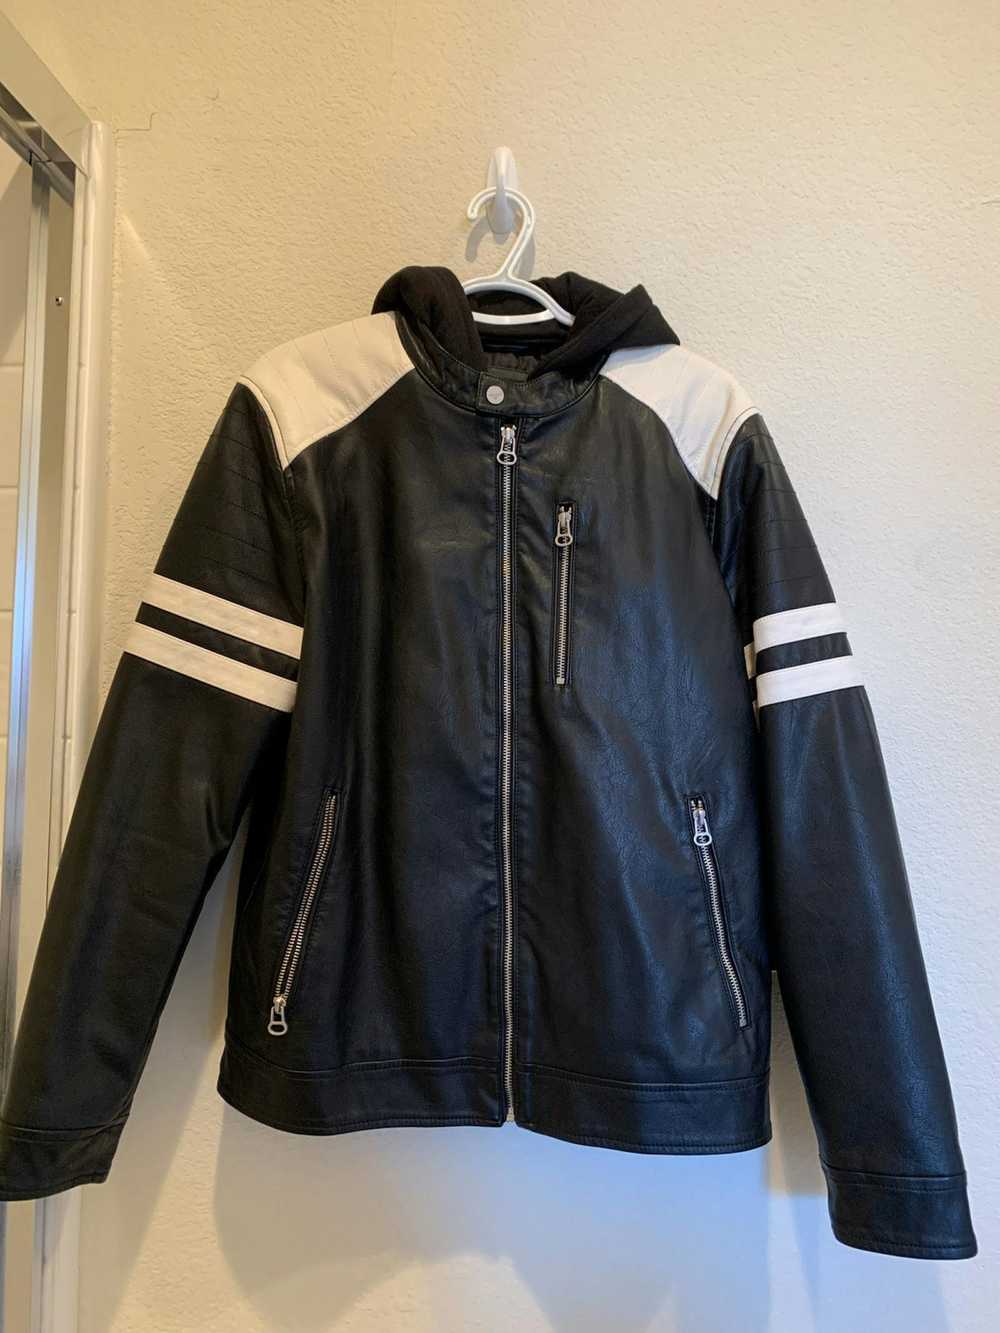 Wilsons Leather Jacket - image 1